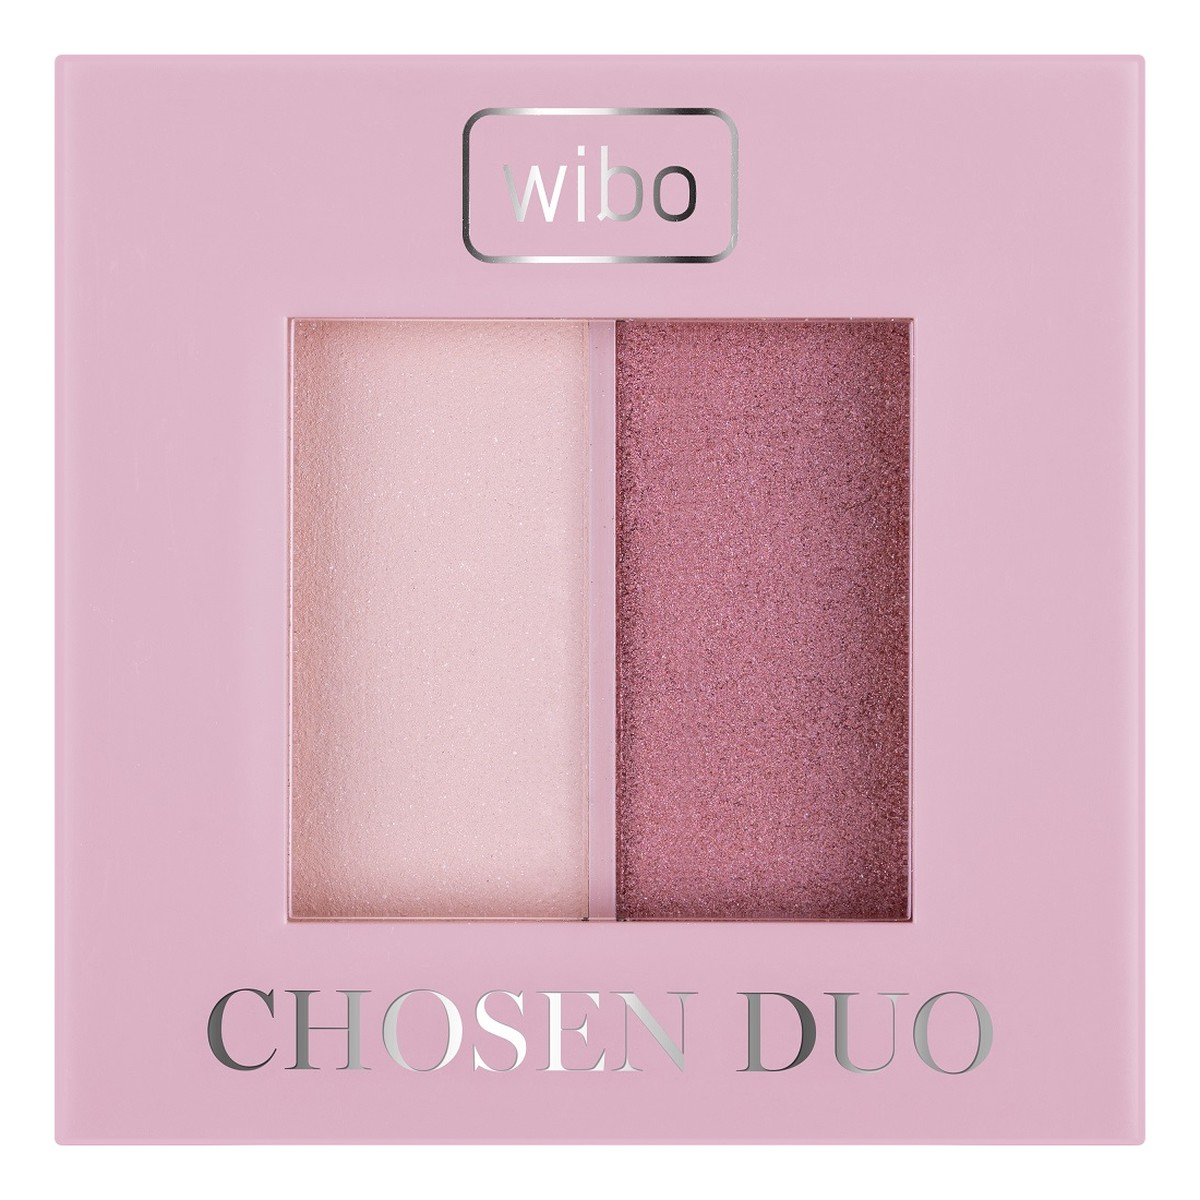 Wibo Chosen Duo Paleta cieni do powiek 4g